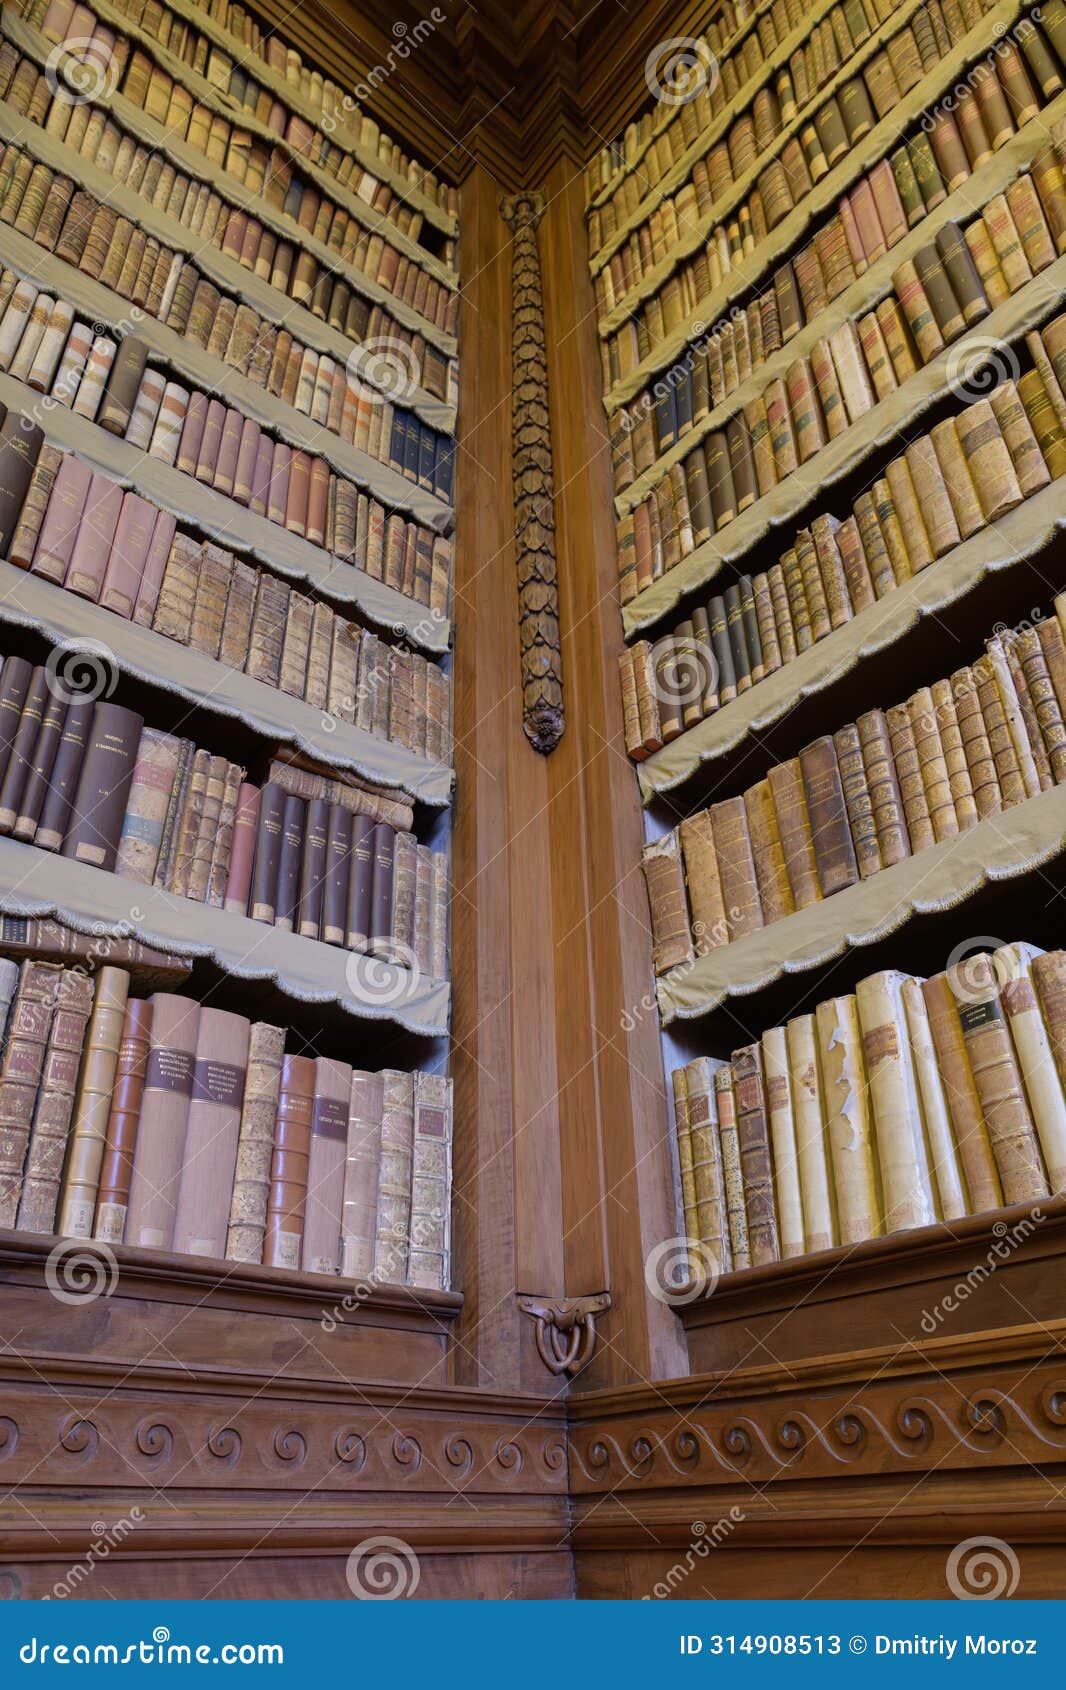 palatina library or biblioteca palatina in parma